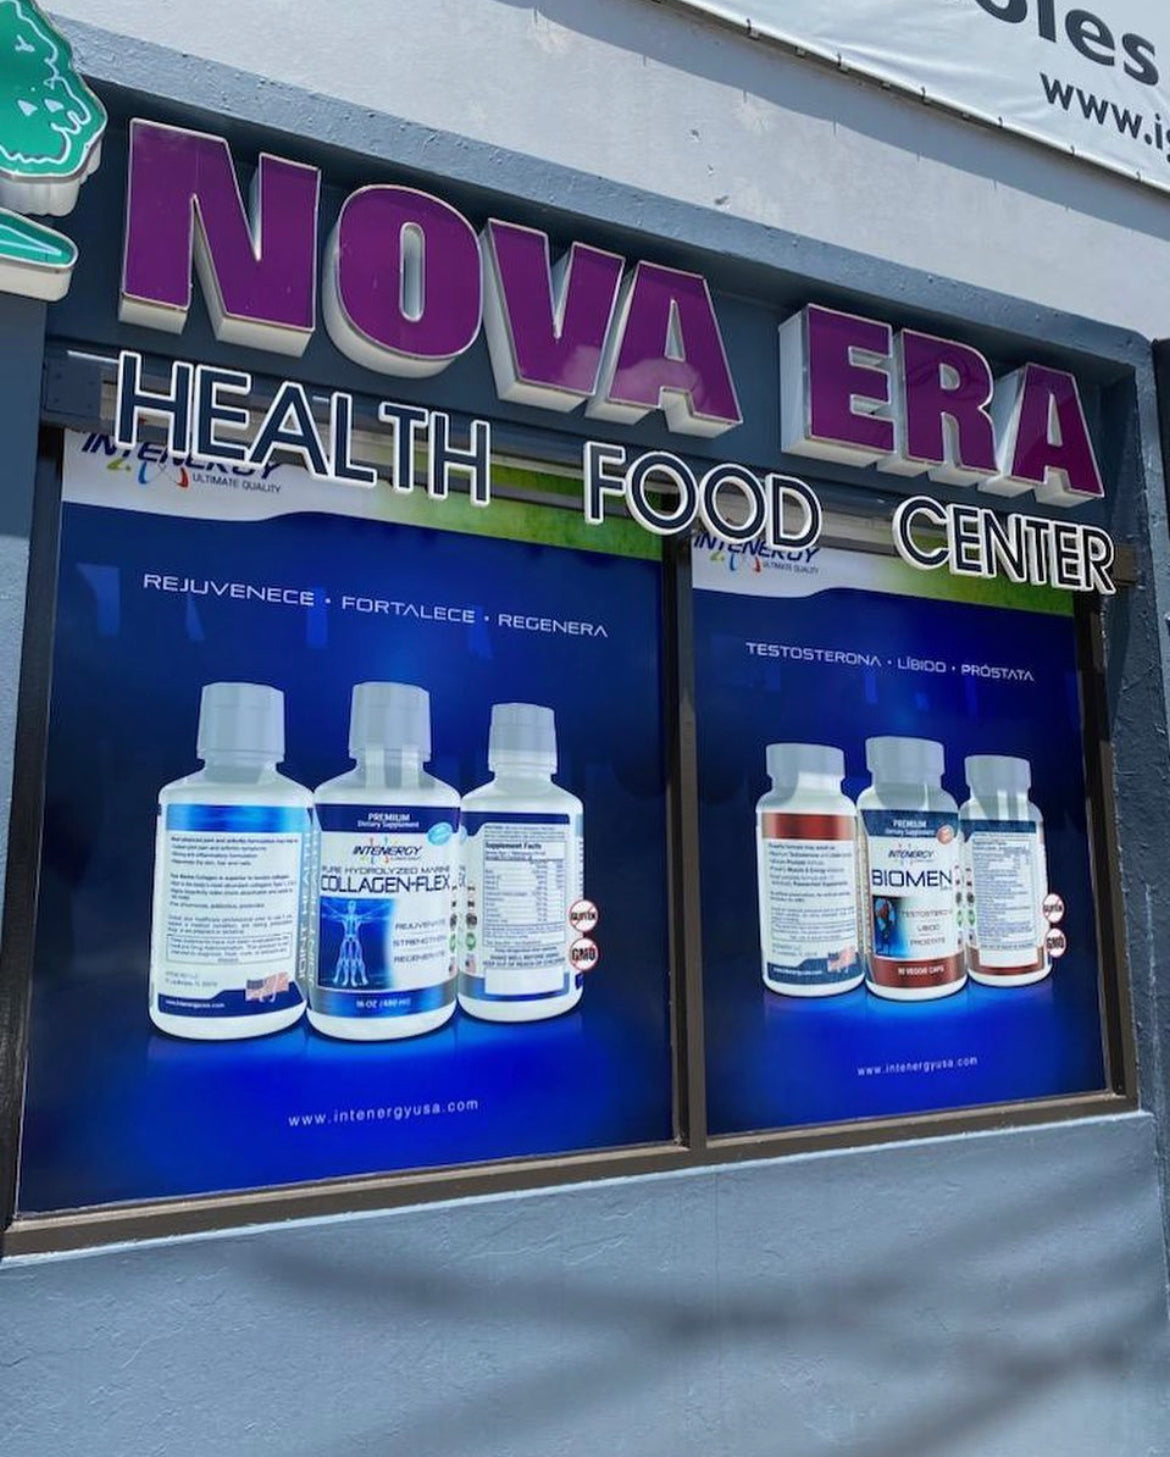 Intenergy Window Displays at Nova Era Health Food Center in Puerto Rico